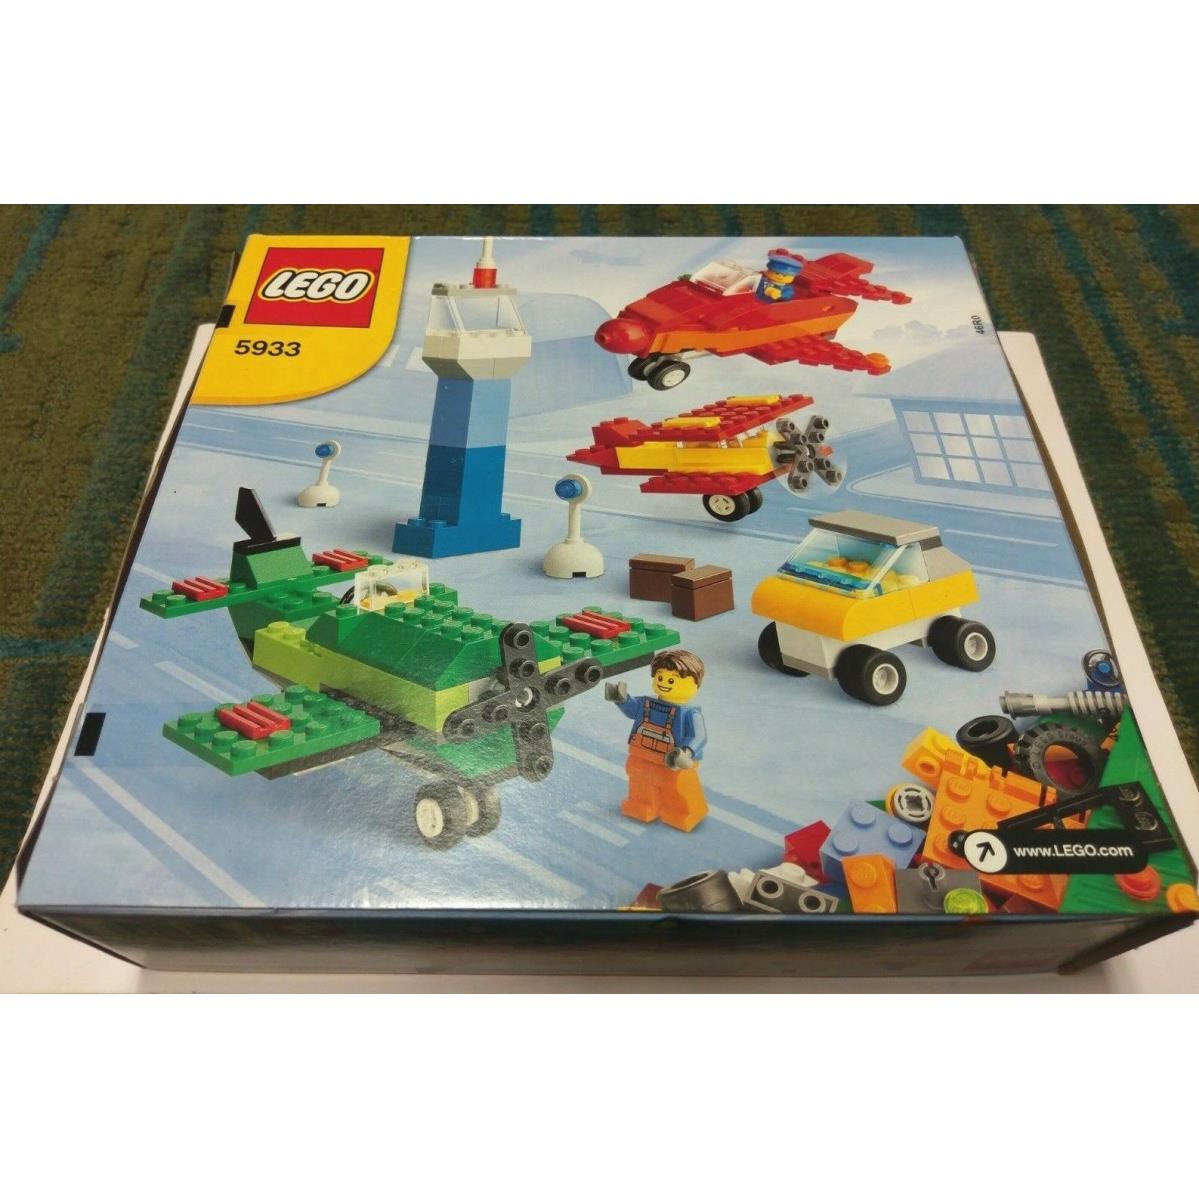 Lego Airport Building Set 5933